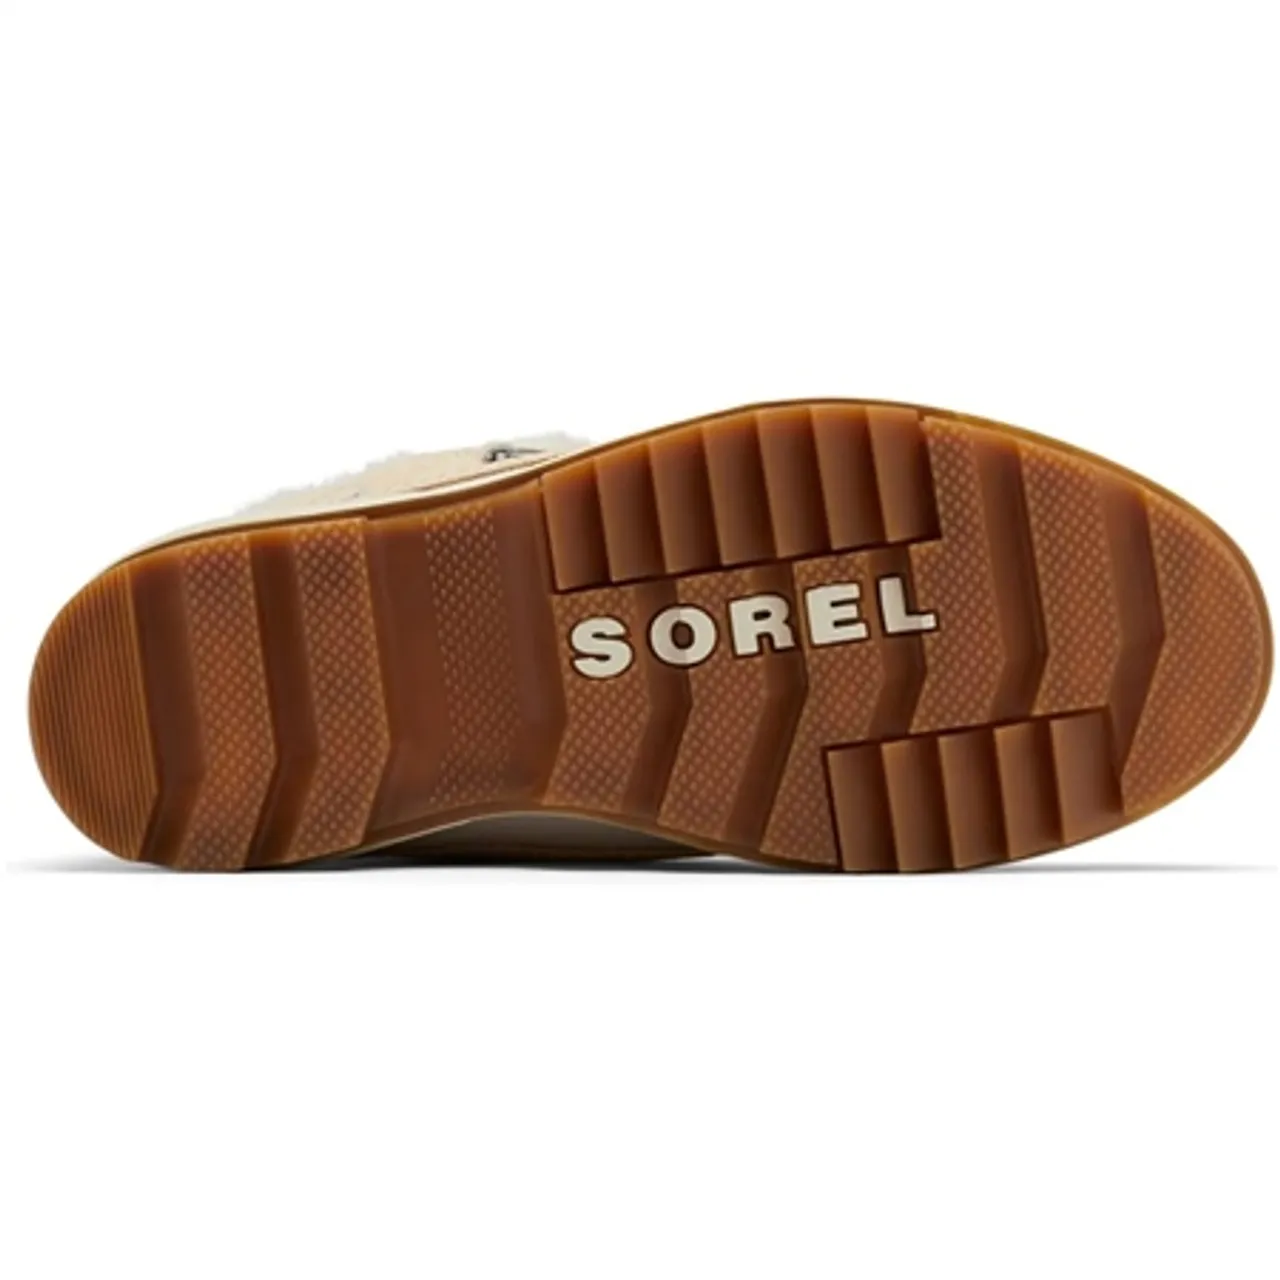 Sorel Torino II Boots - Ceramic & Natural - UK 4 (EU 37)